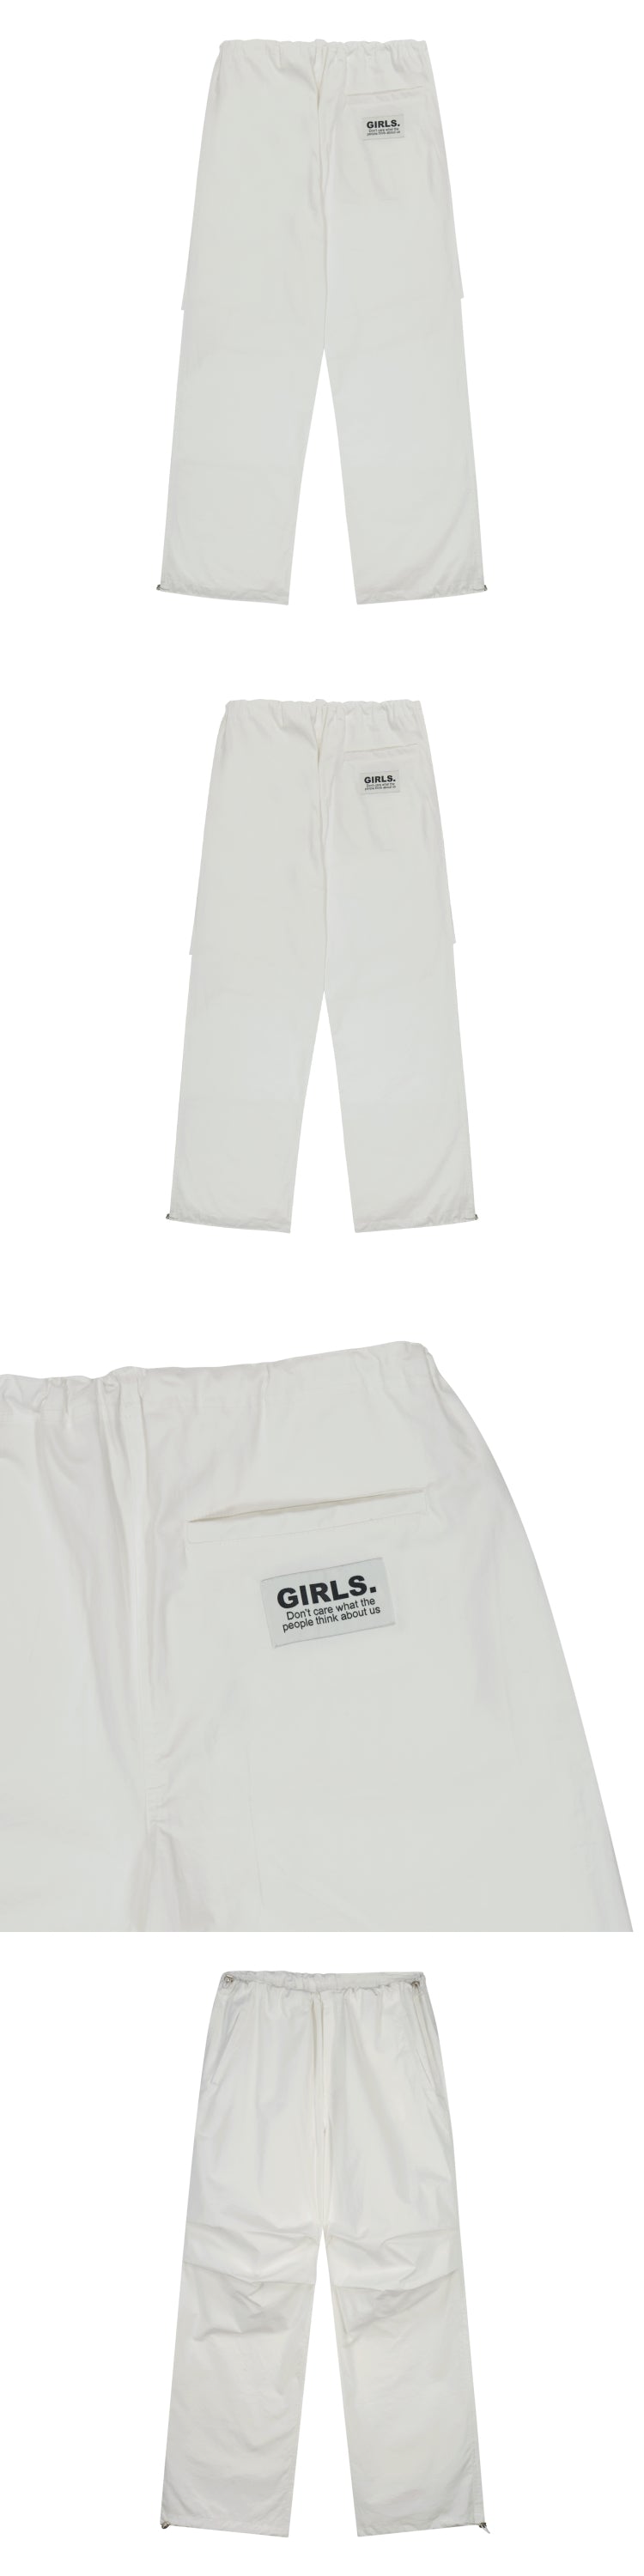 Girls Wide Pants - White